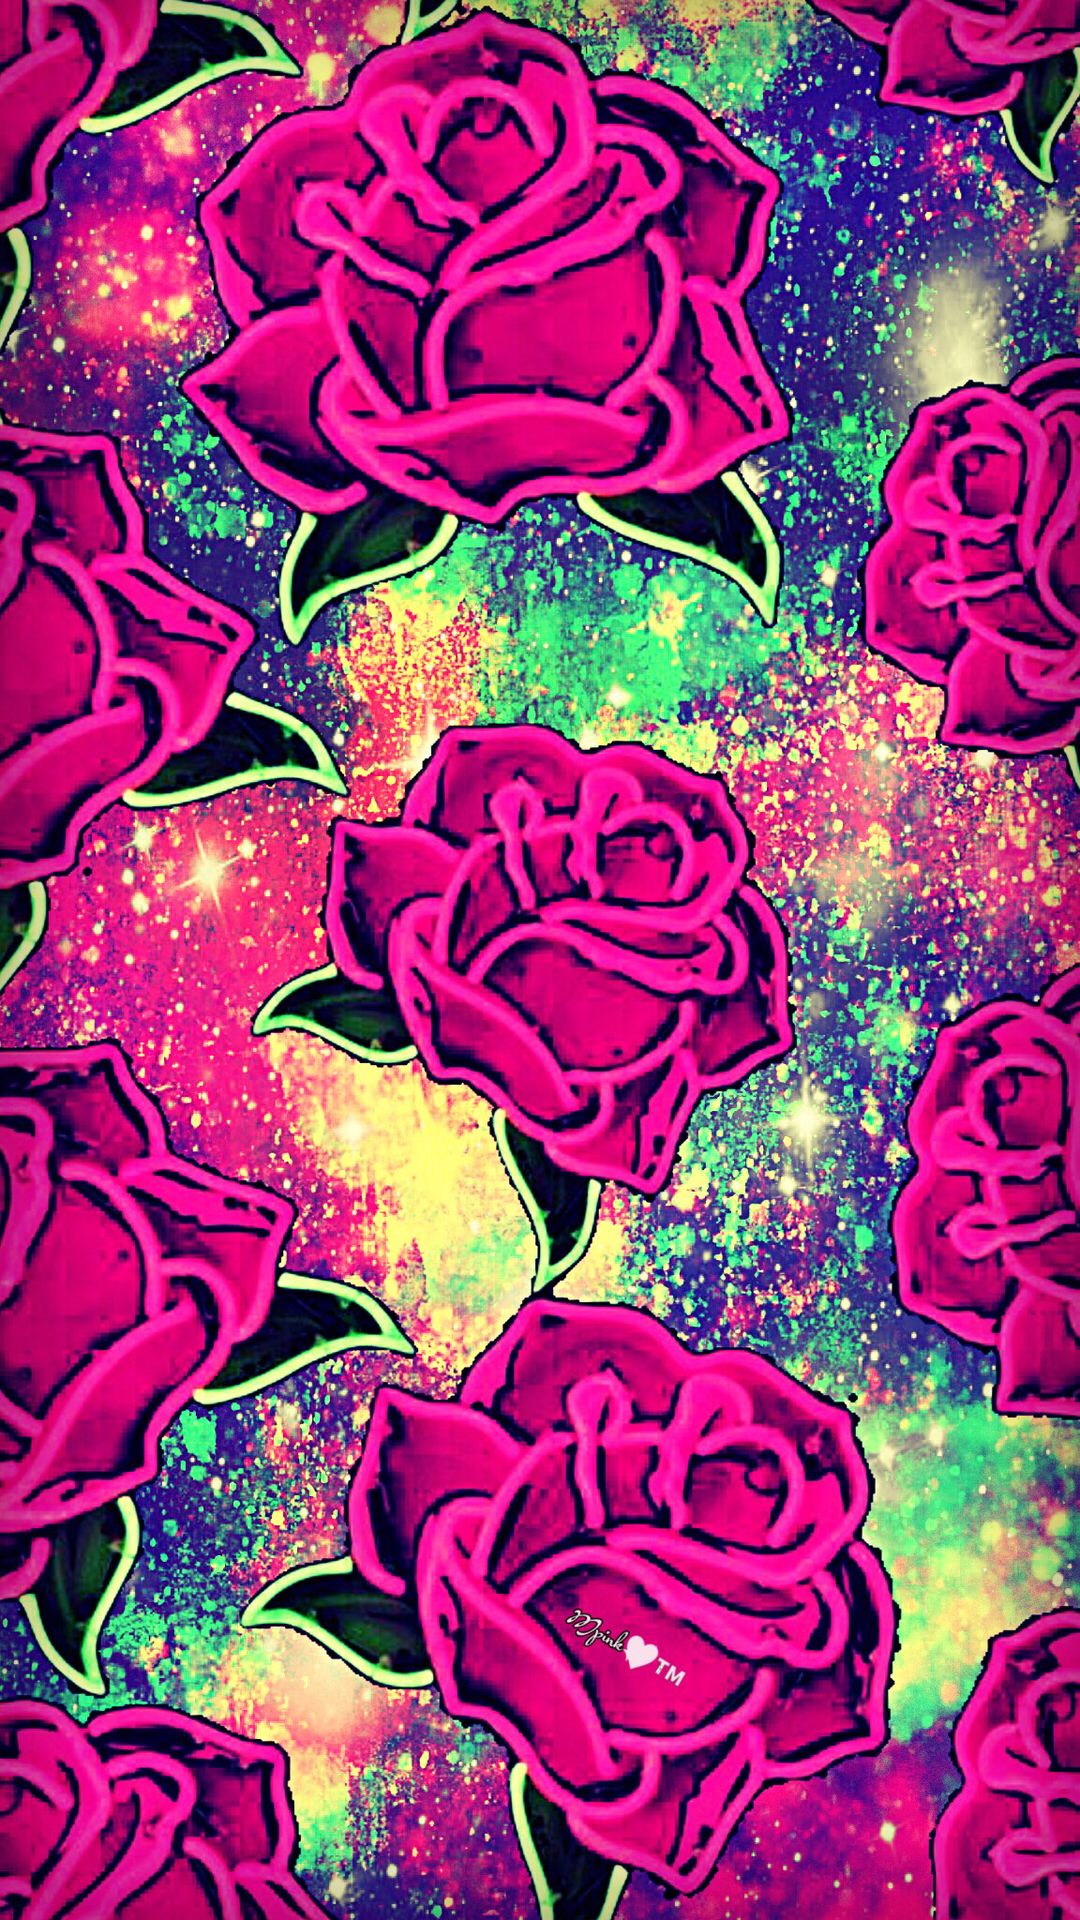 Vintage Rose Galaxy Wallpaper #androidwallpaper #iphonewallpaper #wallpaper #galaxy #sparkle #g. Galaxy wallpaper, Mermaid wallpaper background, Flower wallpaper